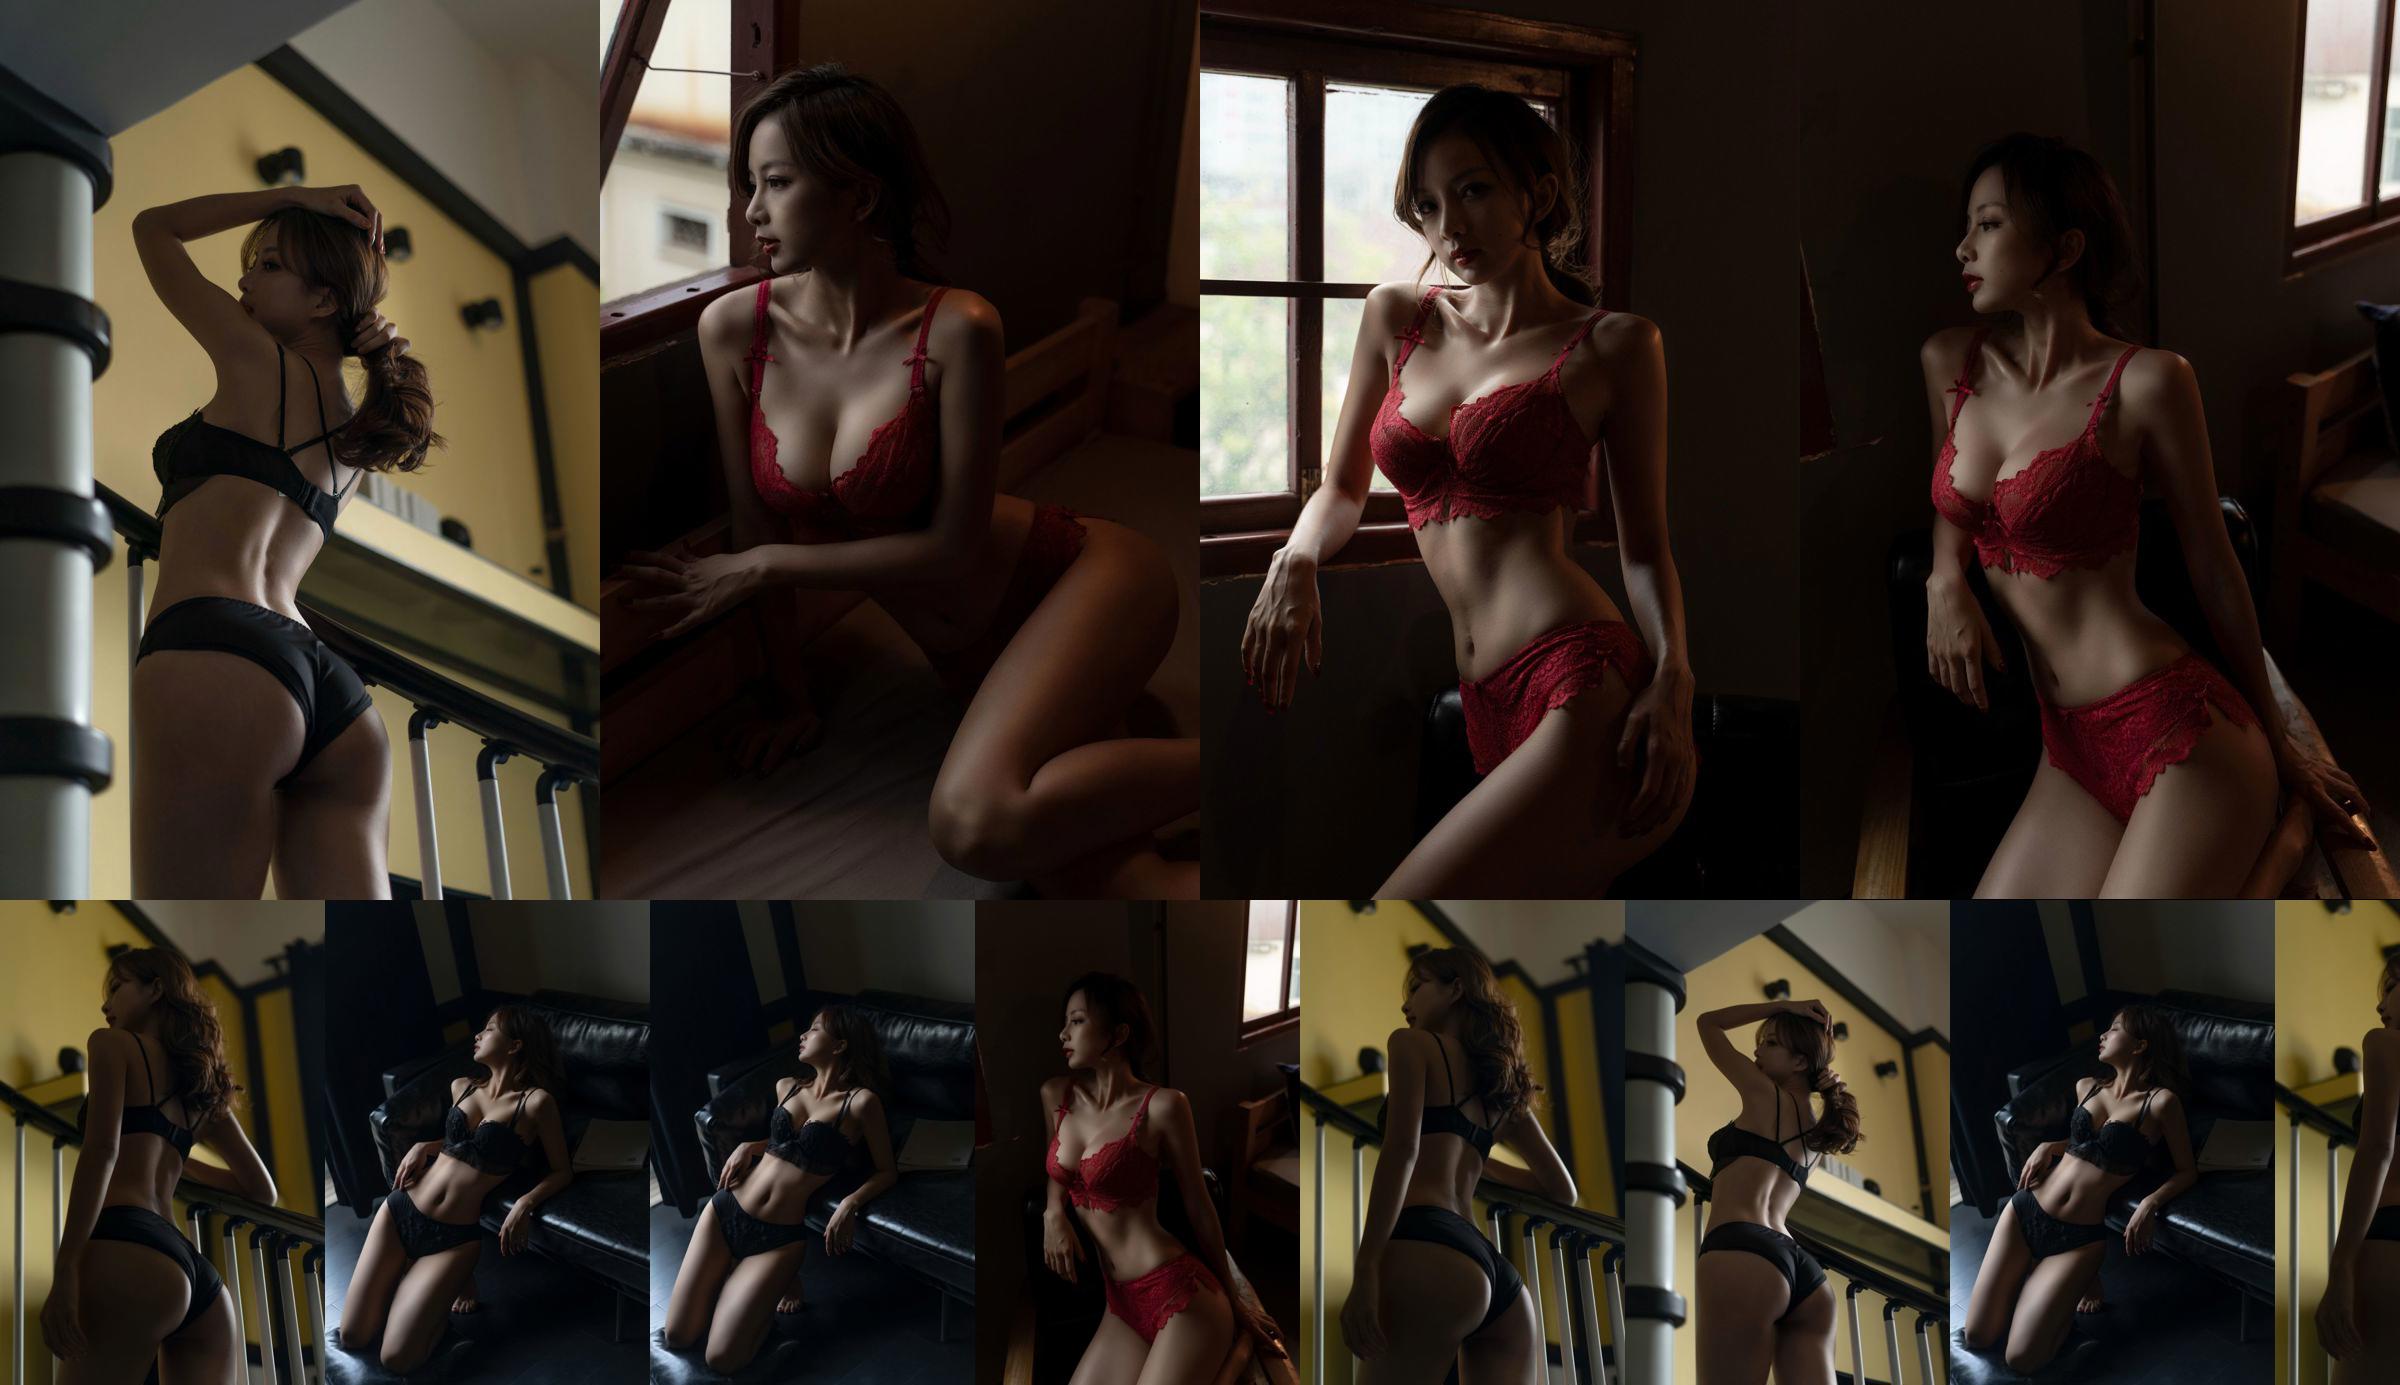 [Net rode COSER-foto] Nicole Satsuki - zwart ondergoed No.9898ee Pagina 1